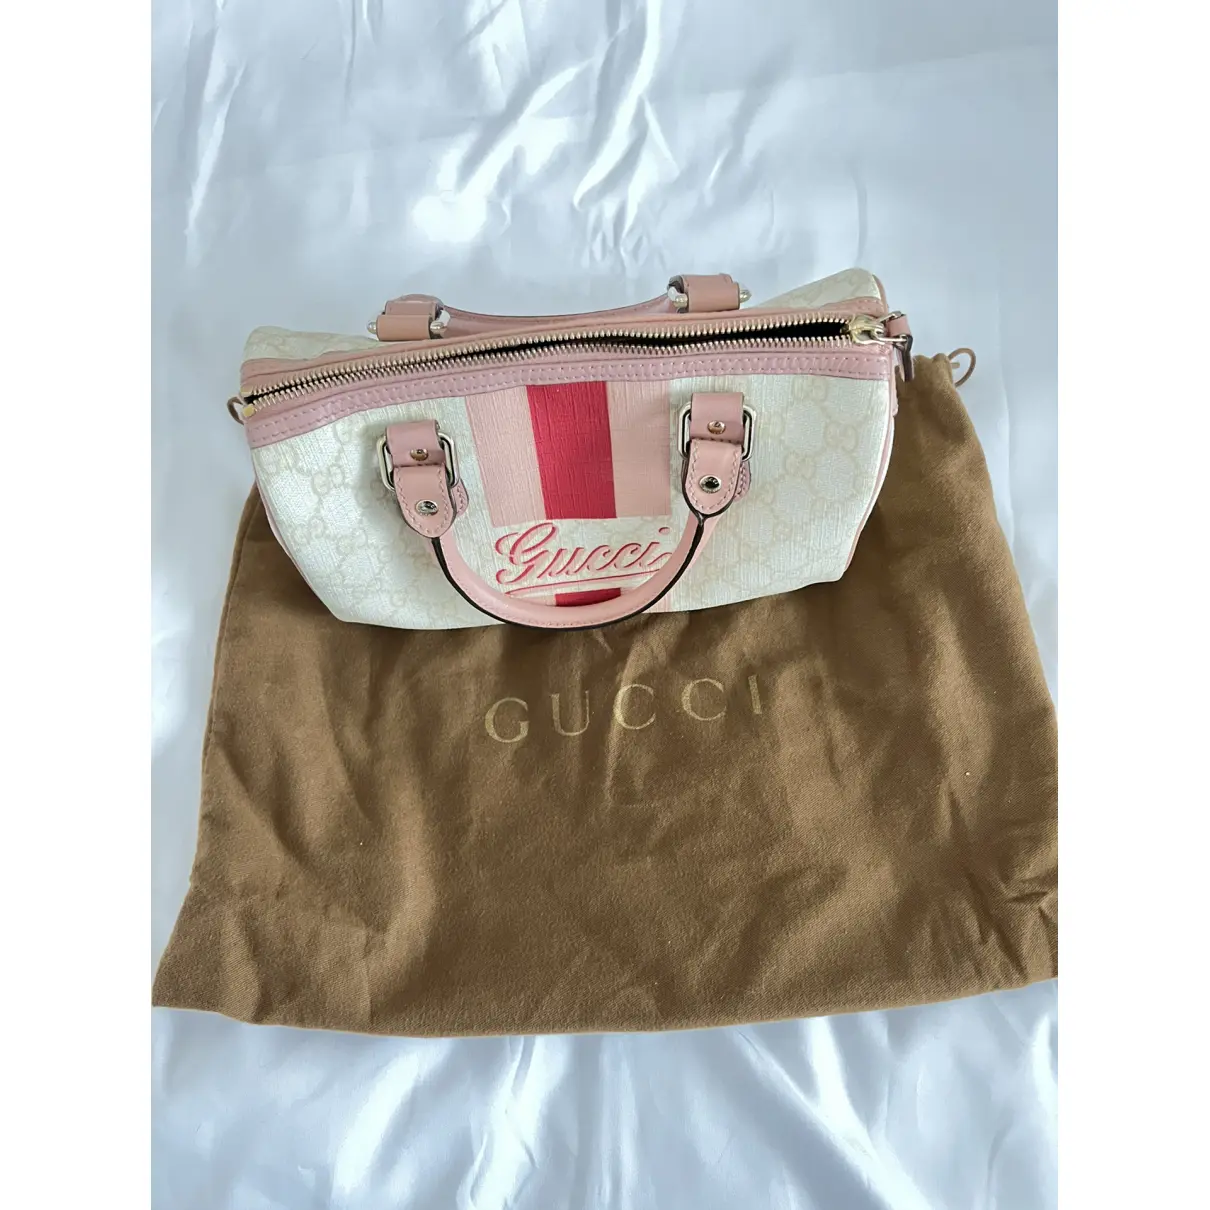 Buy Gucci Boston leather mini bag online - Vintage